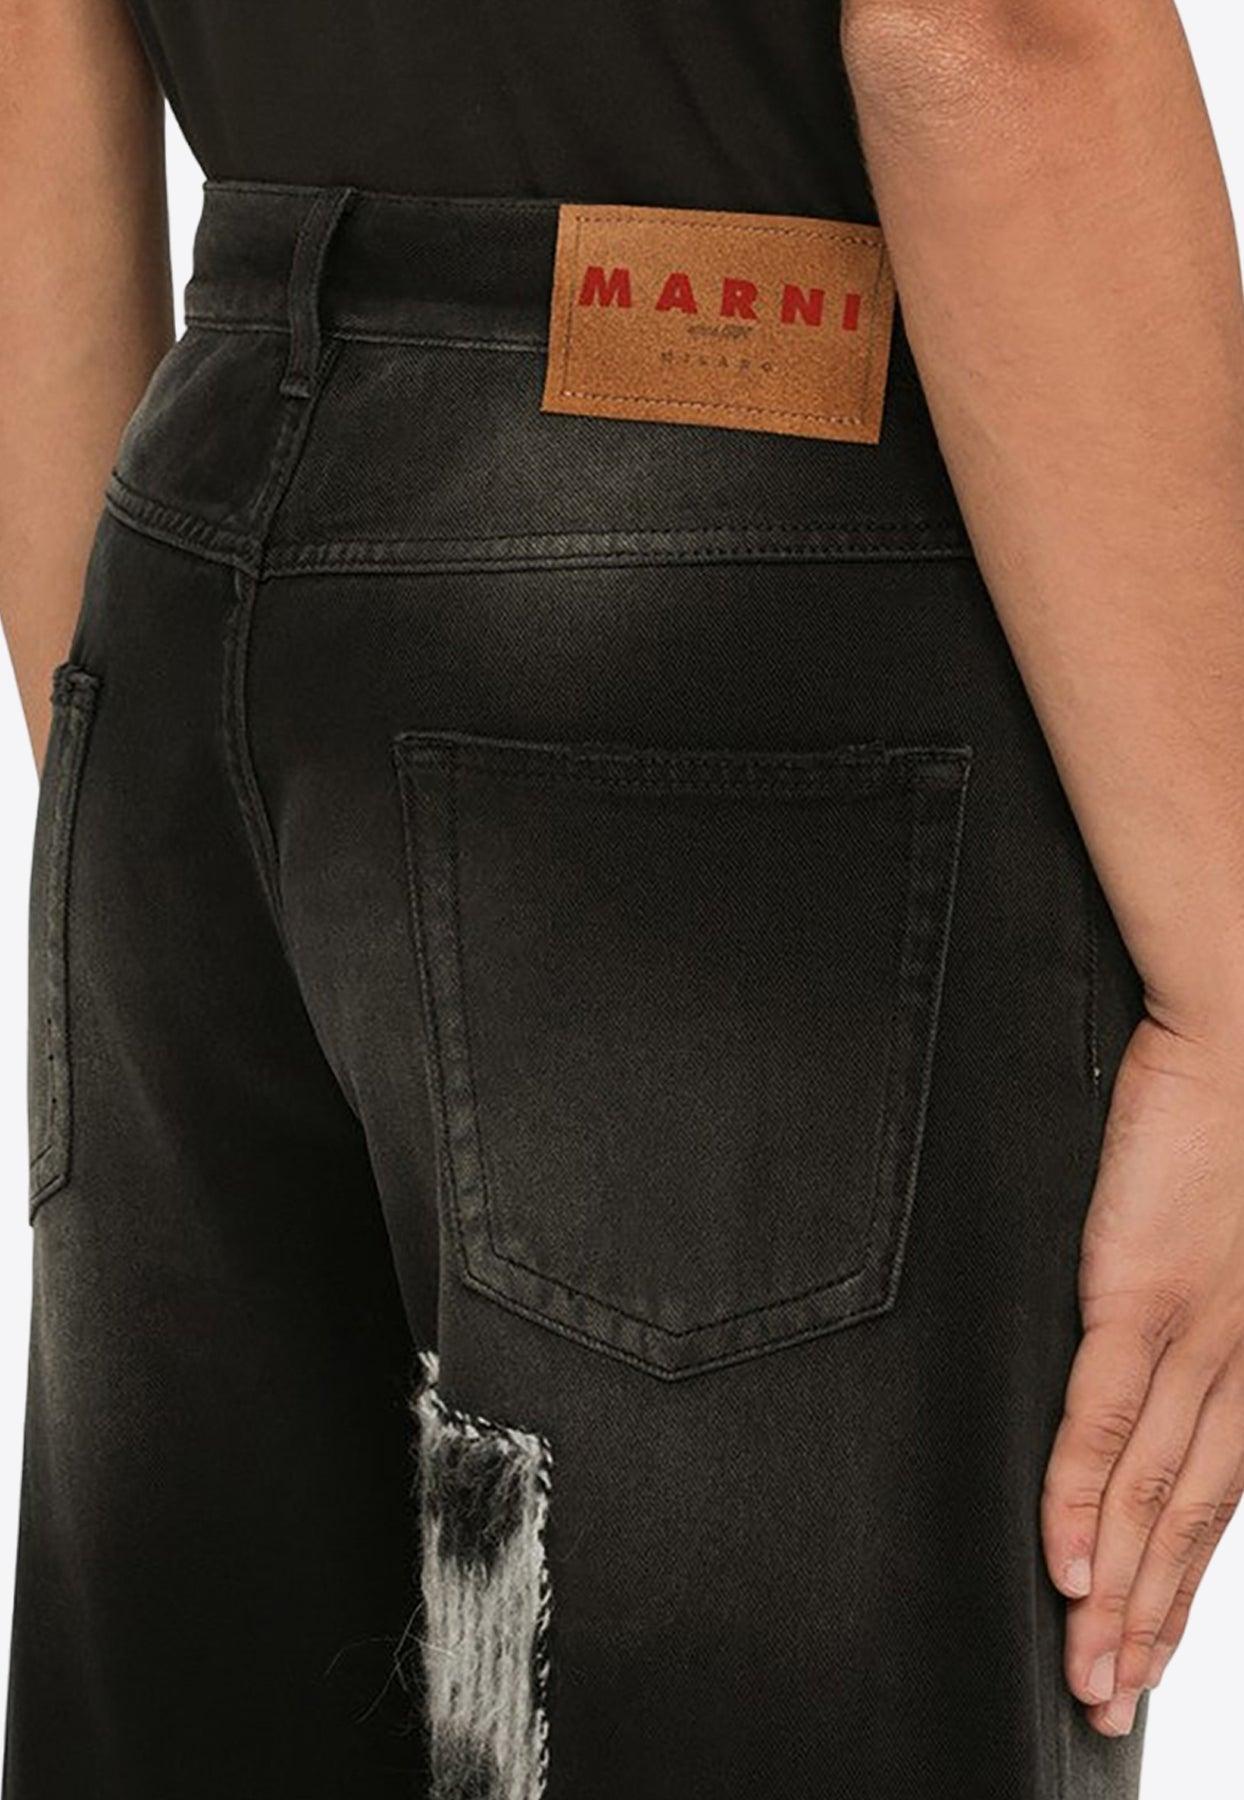 Marni - Straight-Leg Patchwork Jeans - Black Marni